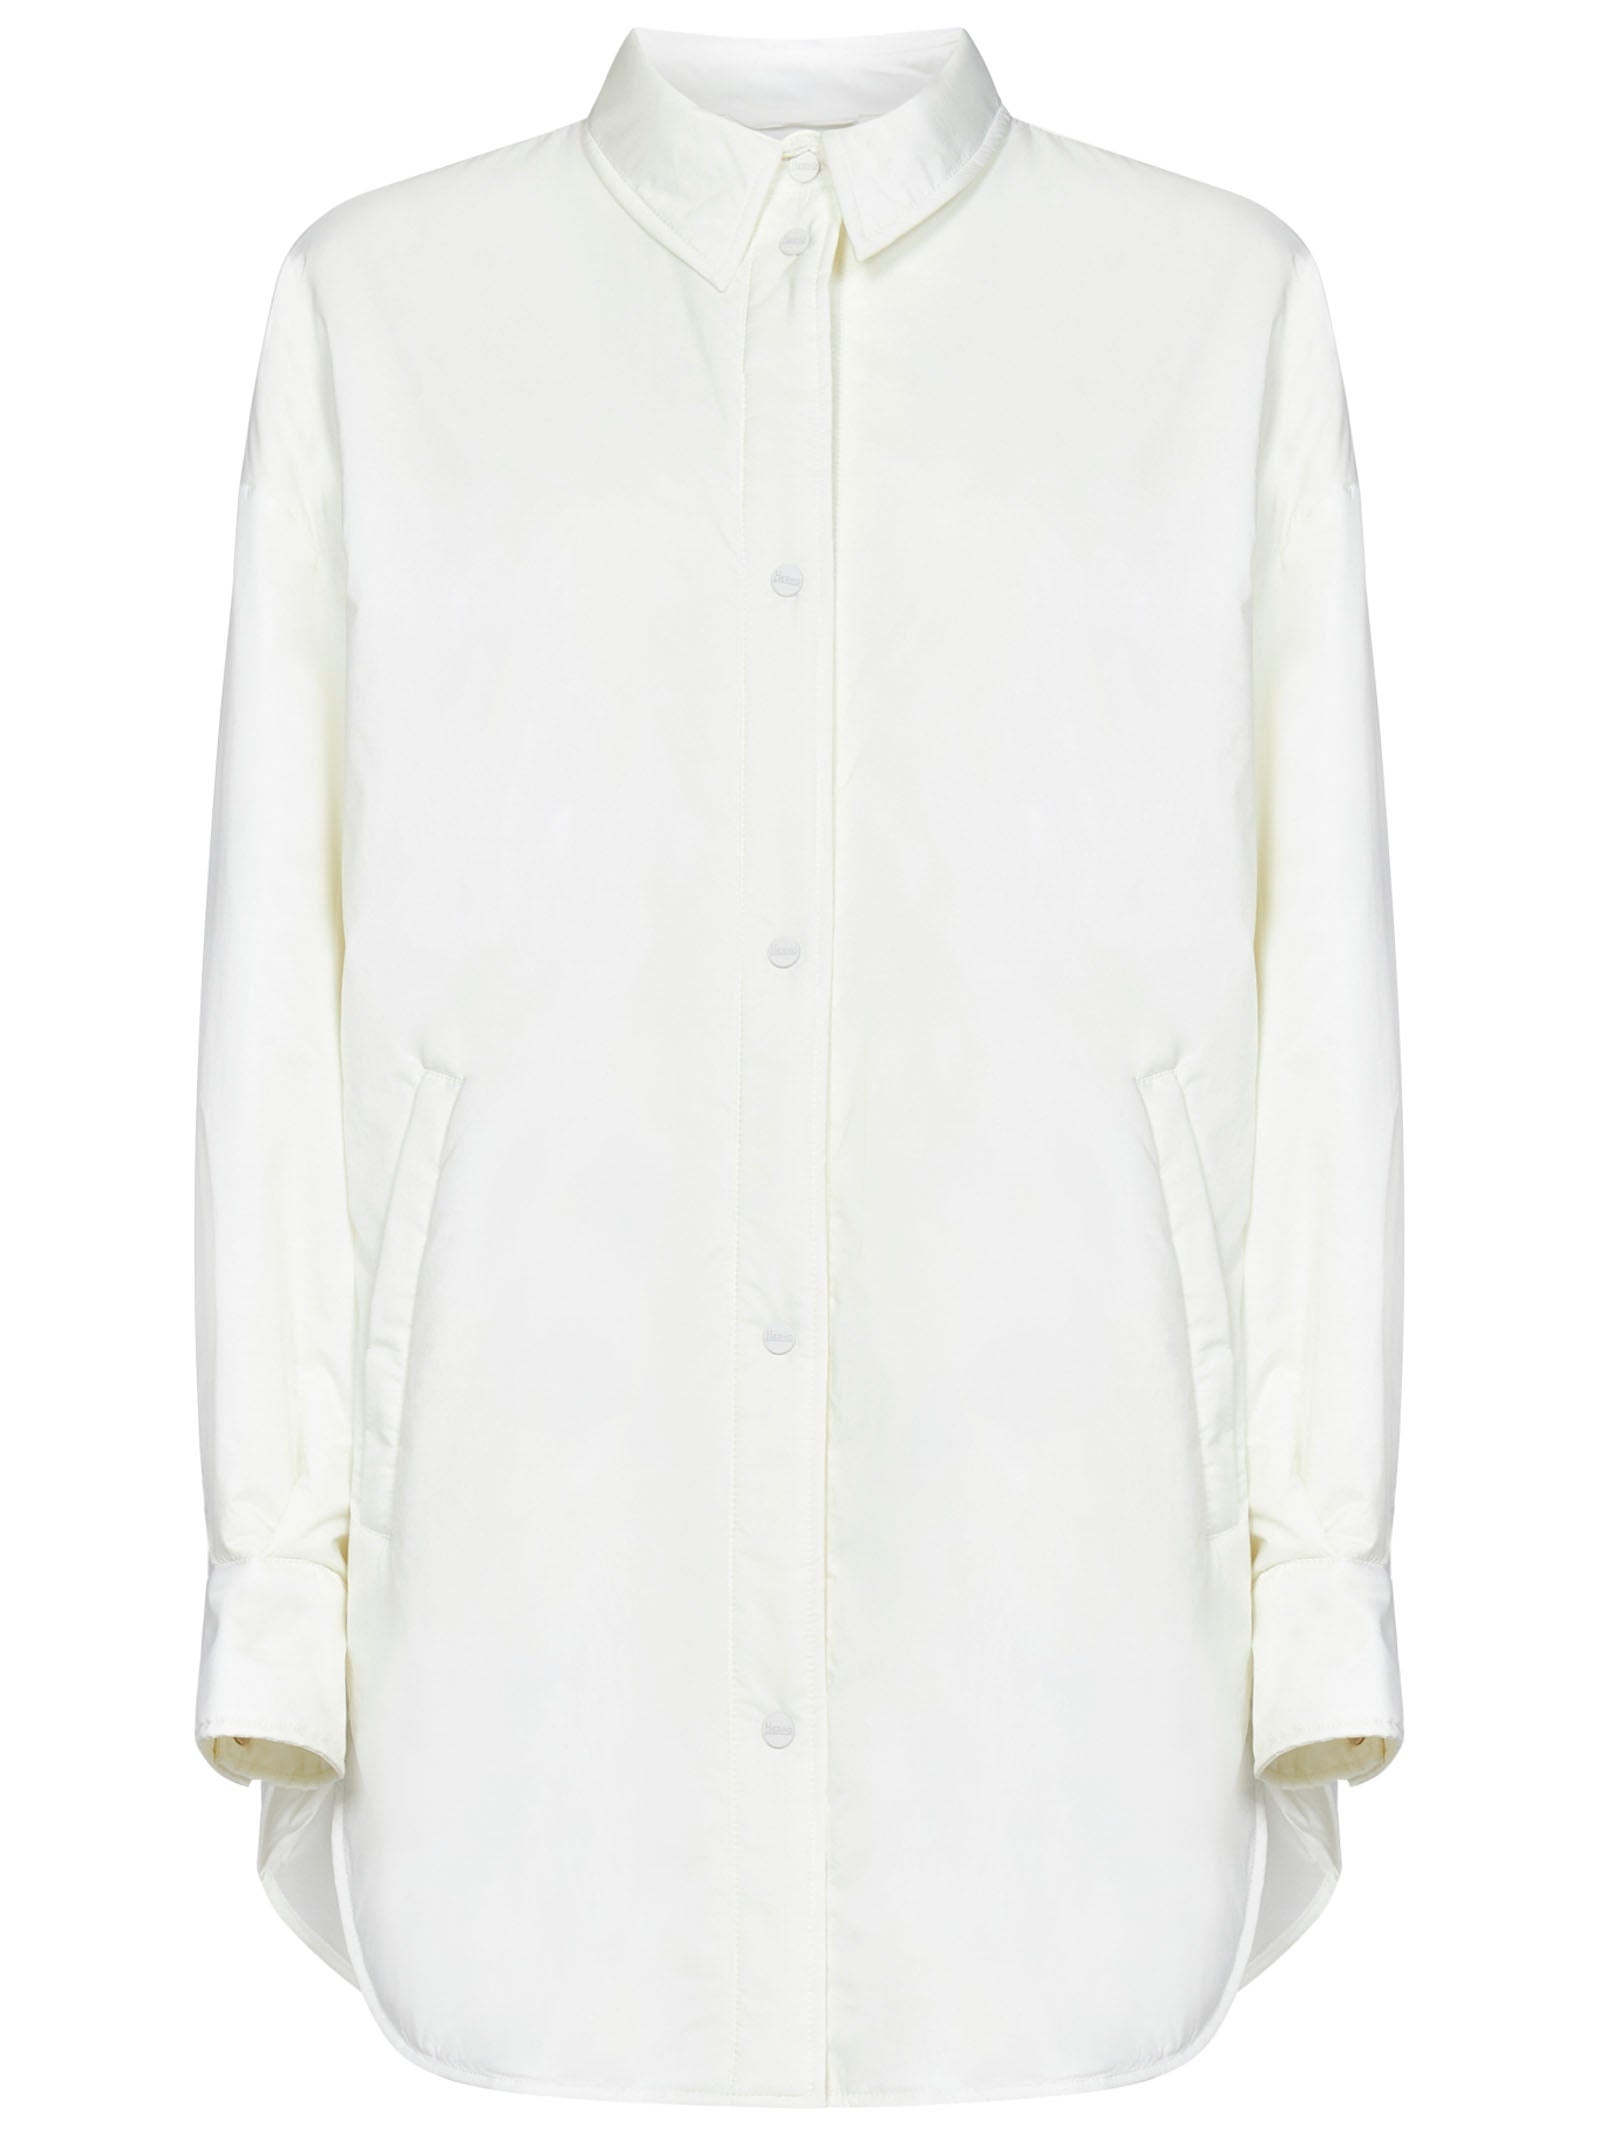 Oversized white shirt in ultralight 20 denier nylon with thin padding. - 1